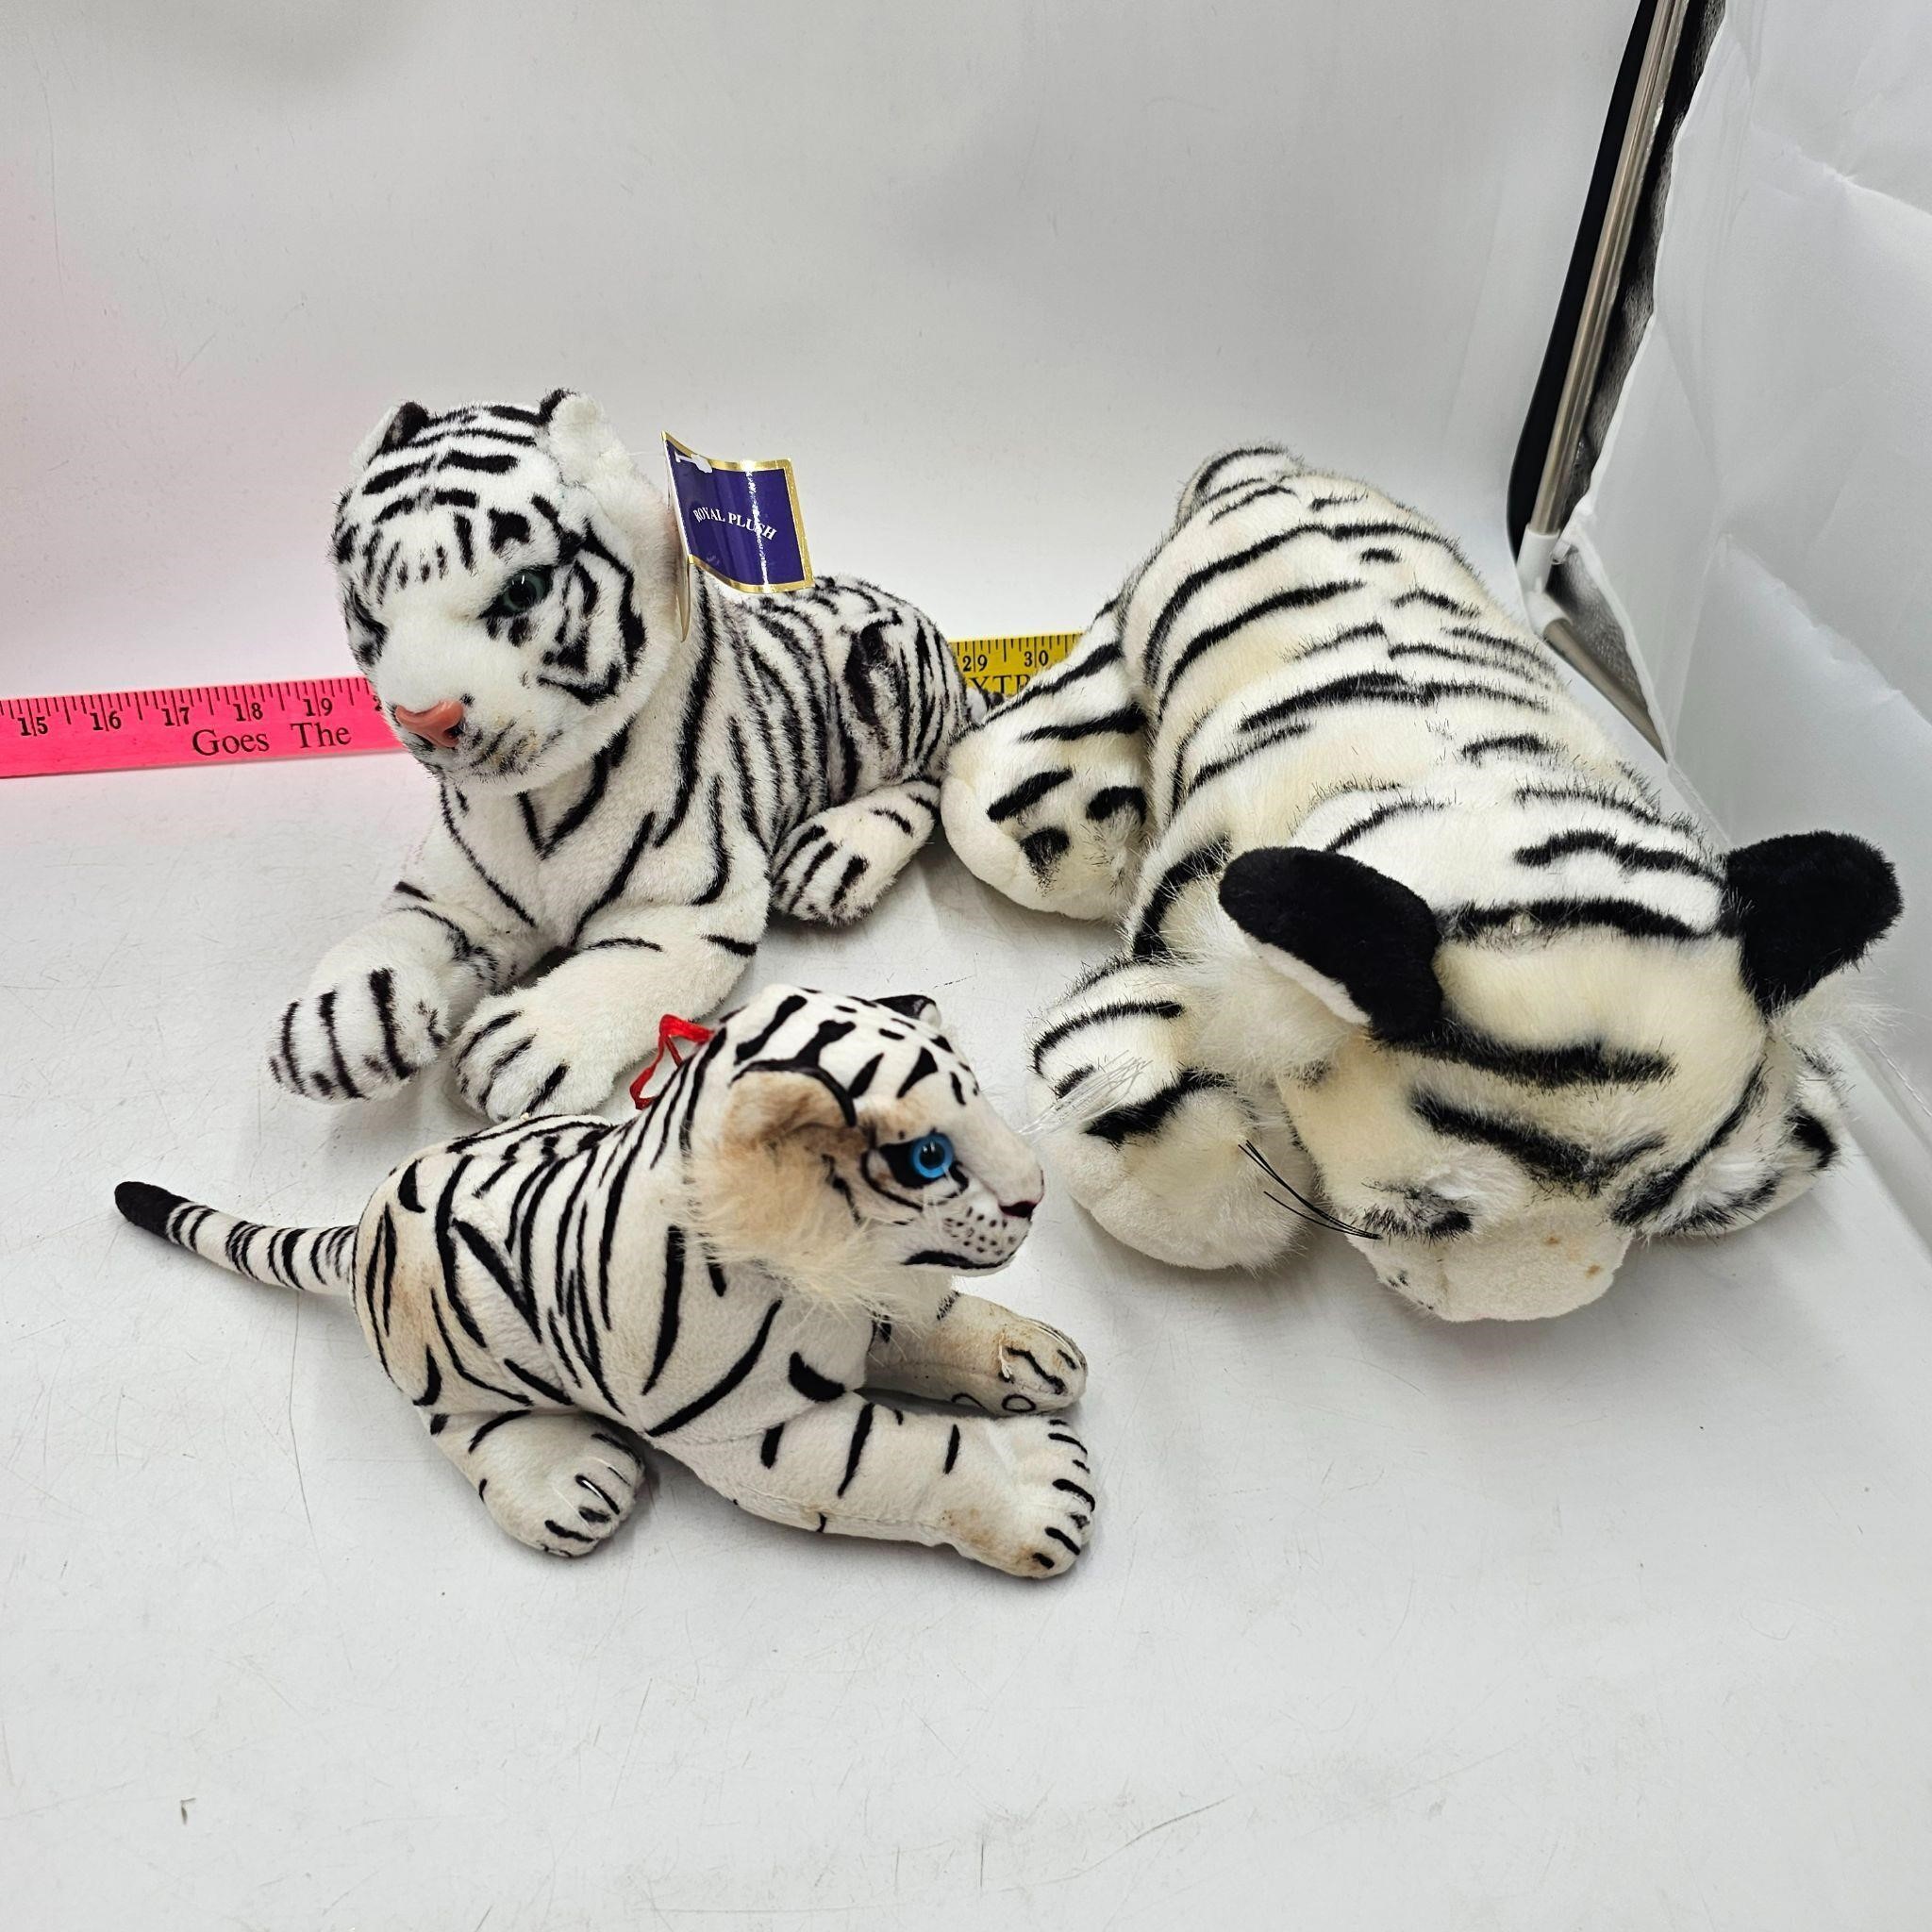 White Tiger Stuffed Animals (3)